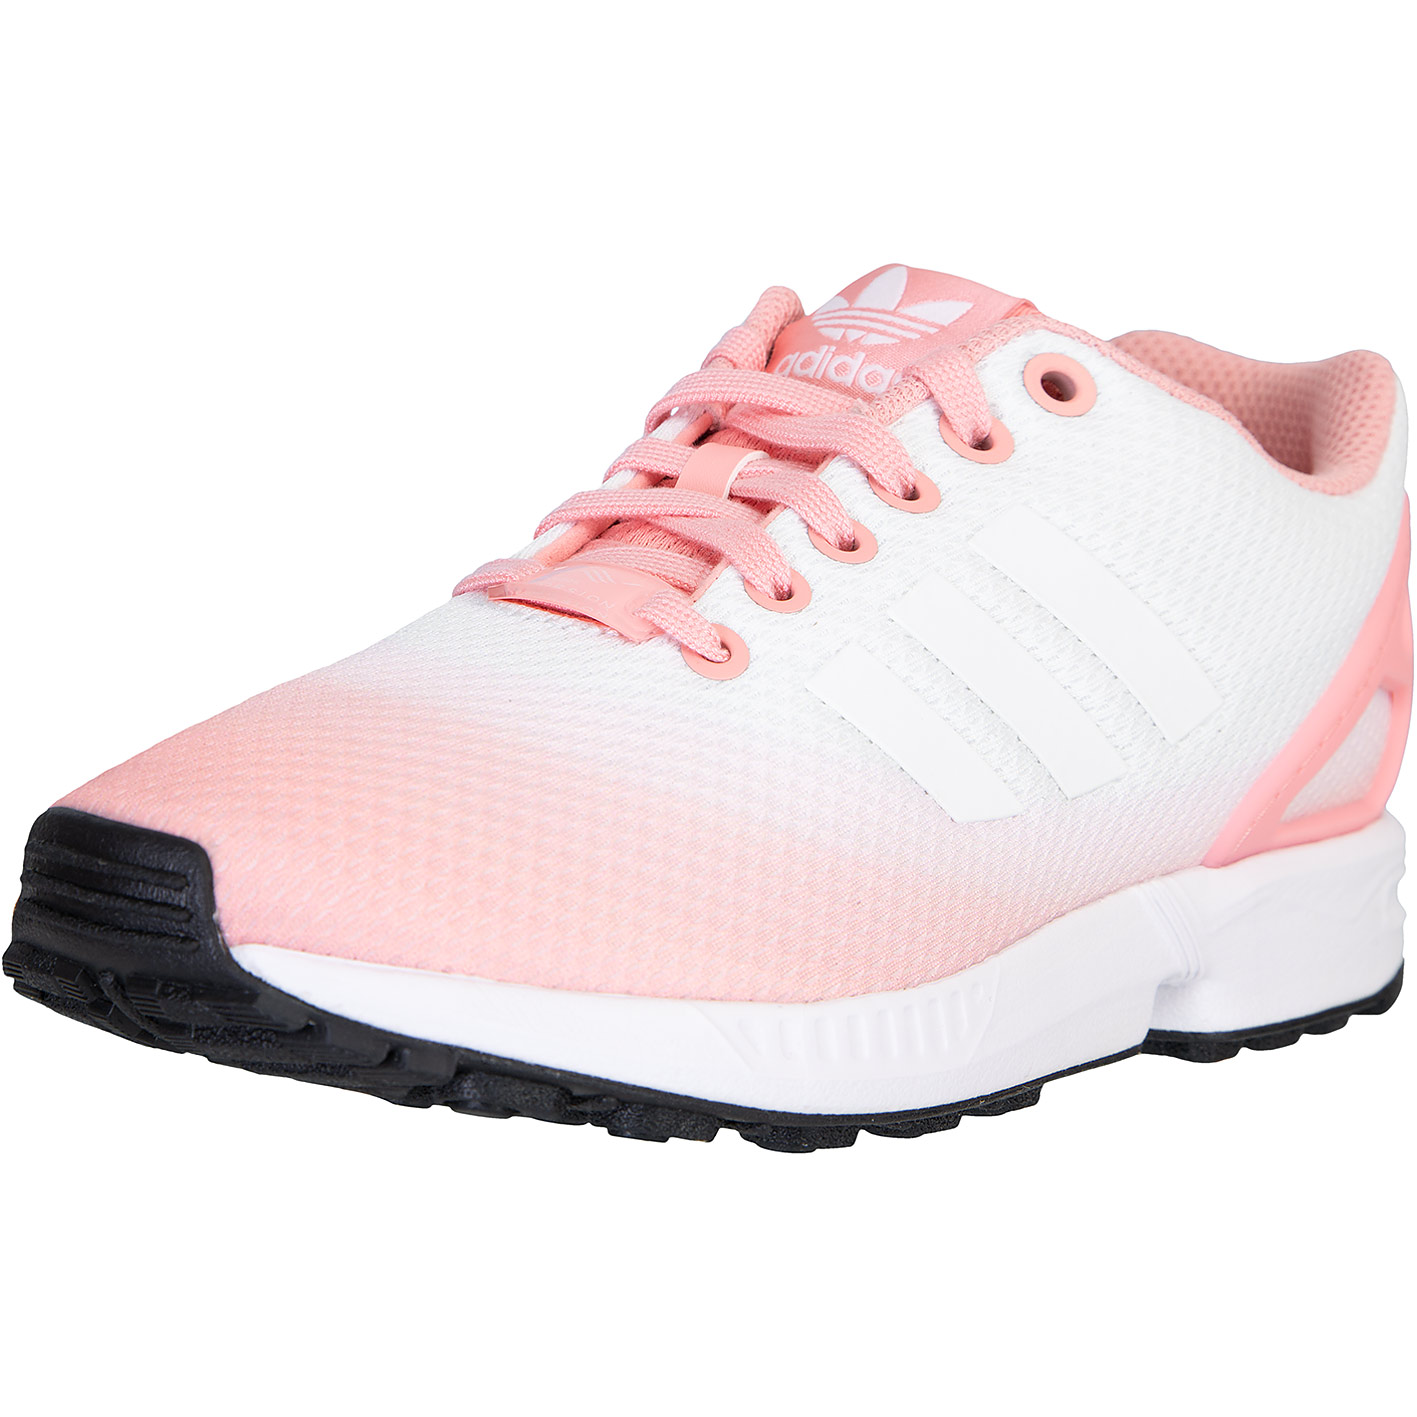 Adidas Flux Damen Sneaker rosa/weiß bestellen!